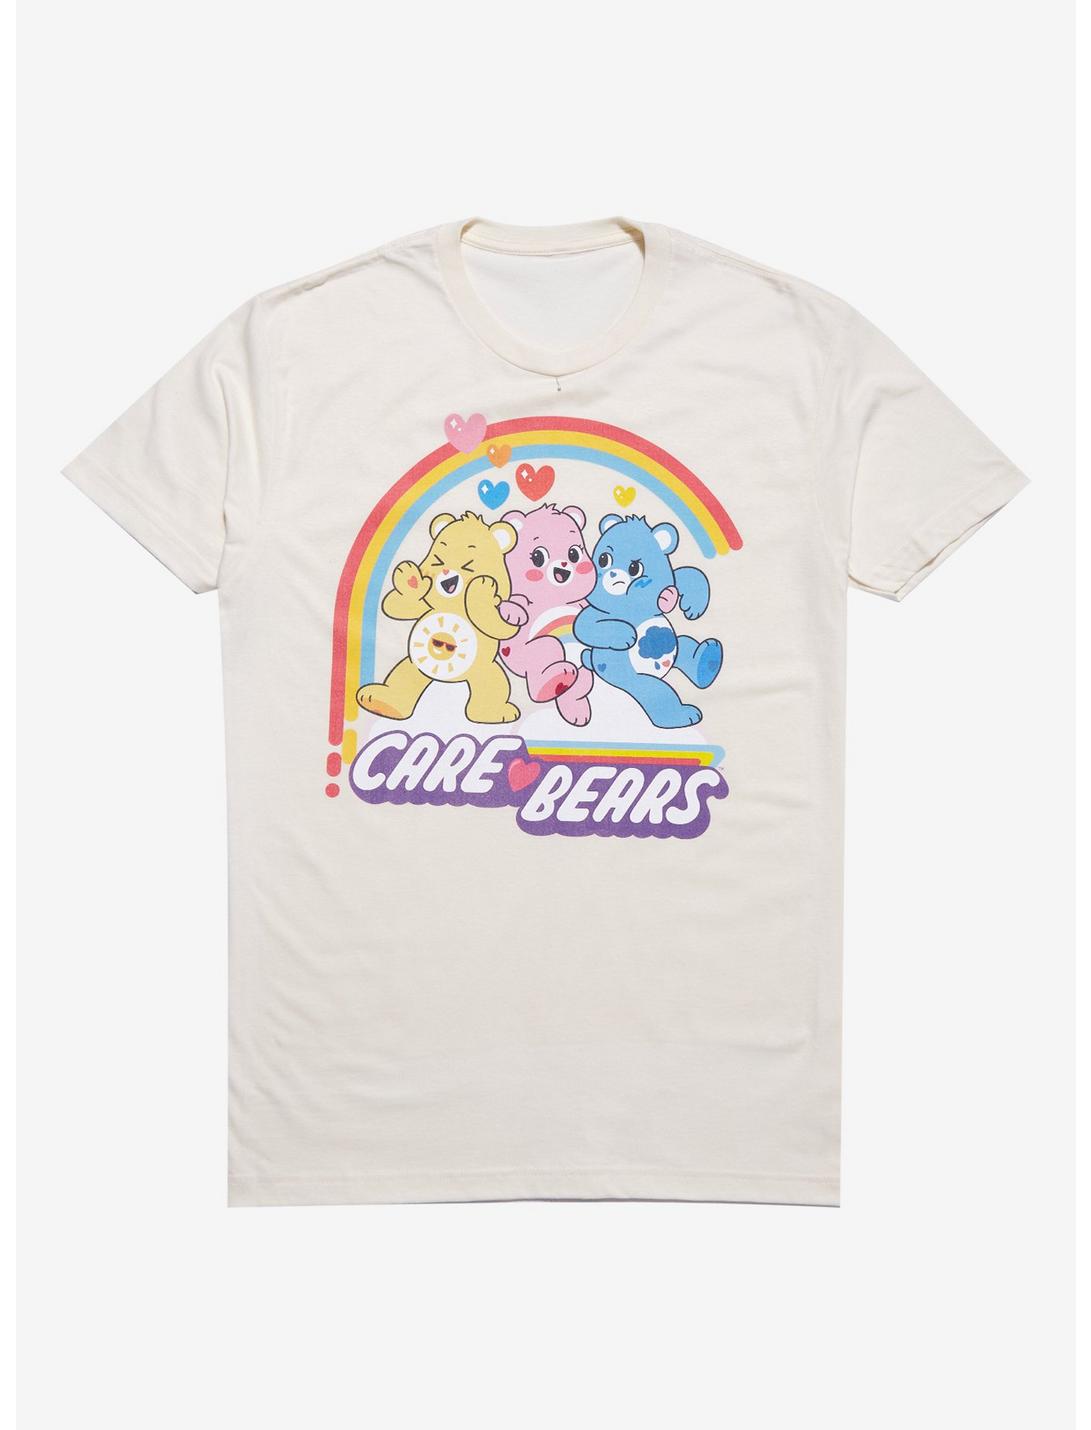 Care Bears Trio Rainbow Boyfriend Fit Girls T-Shirt, MULTI, hi-res